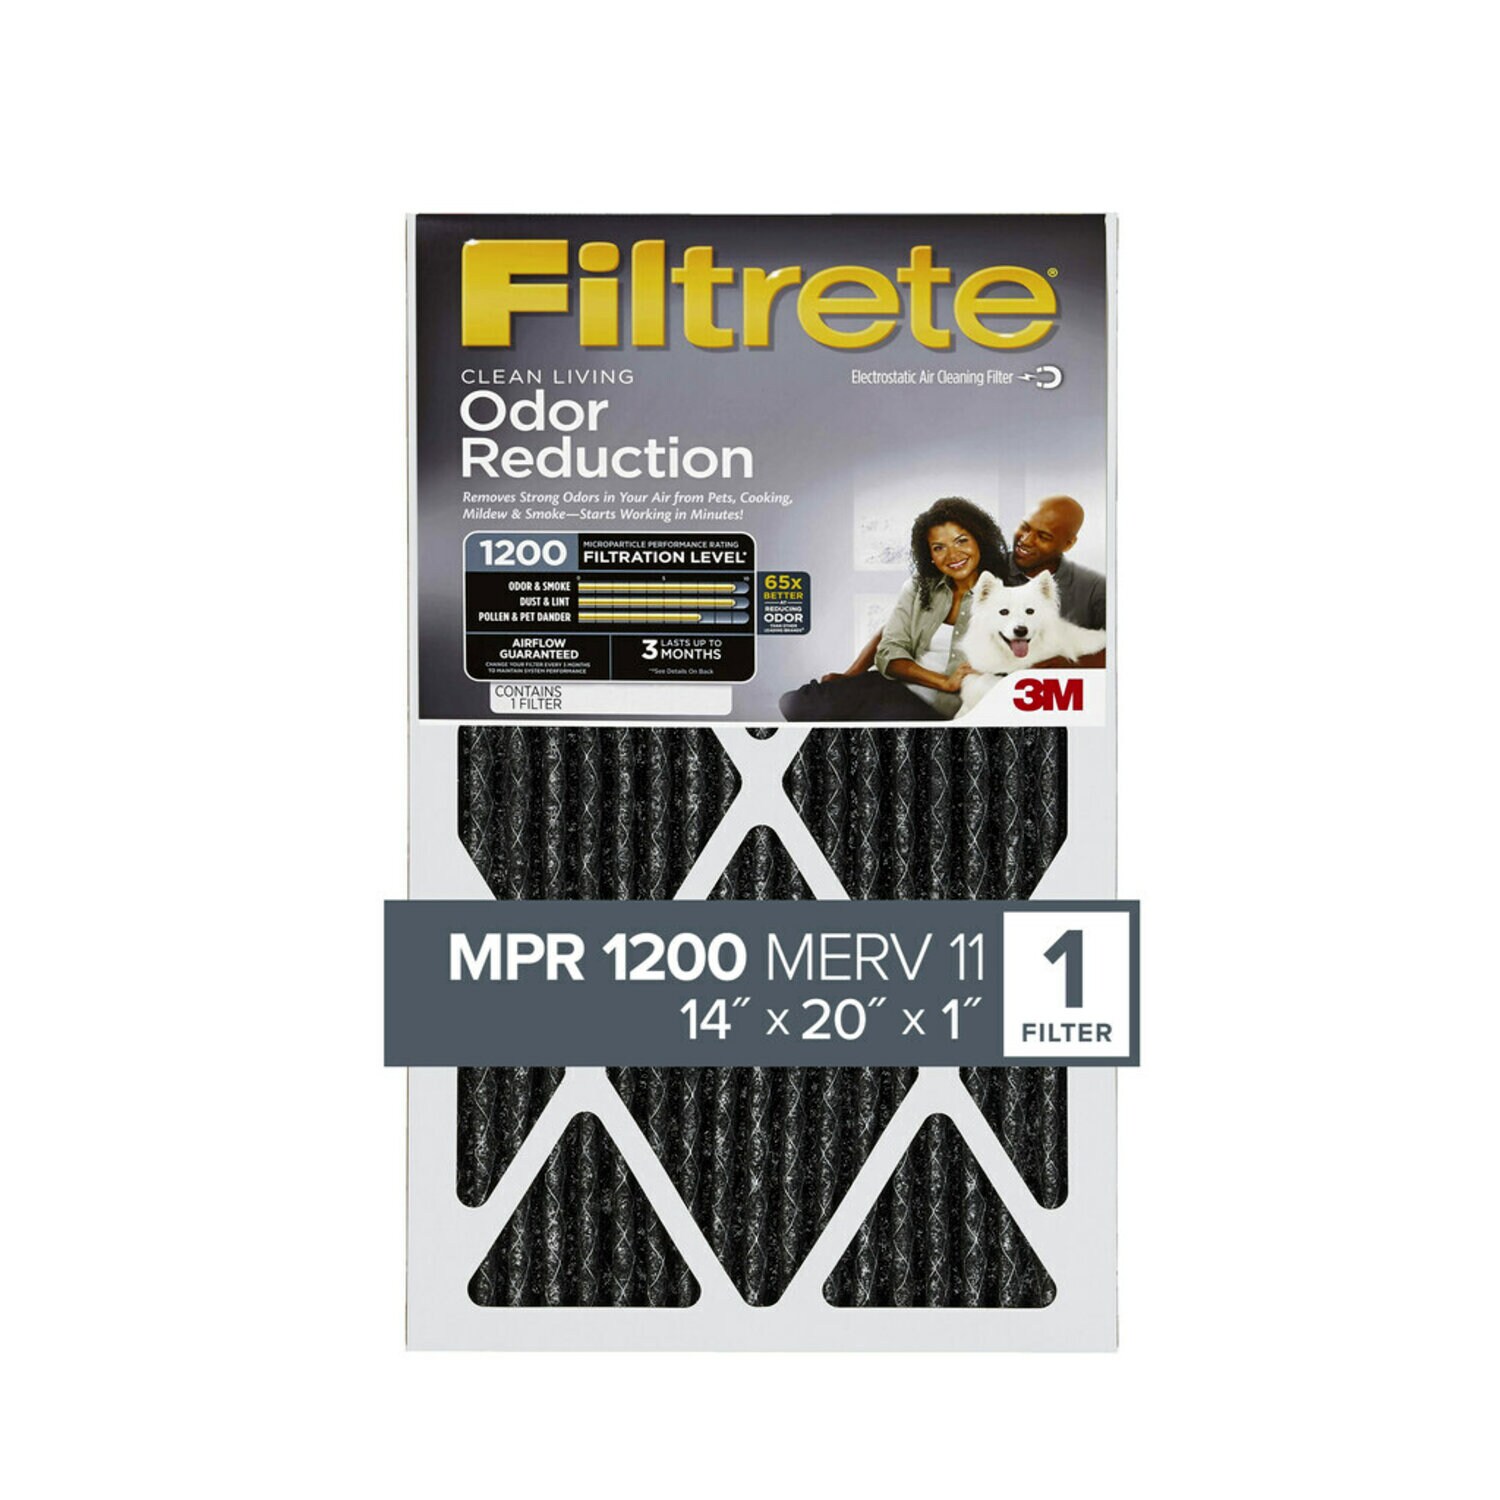 7010371356 - Filtrete Home Odor Reduction Filter HOME05-4, 14 in x 20 in x 1 in
(35,5 cm x 50,8 cm x 2,5 cm)